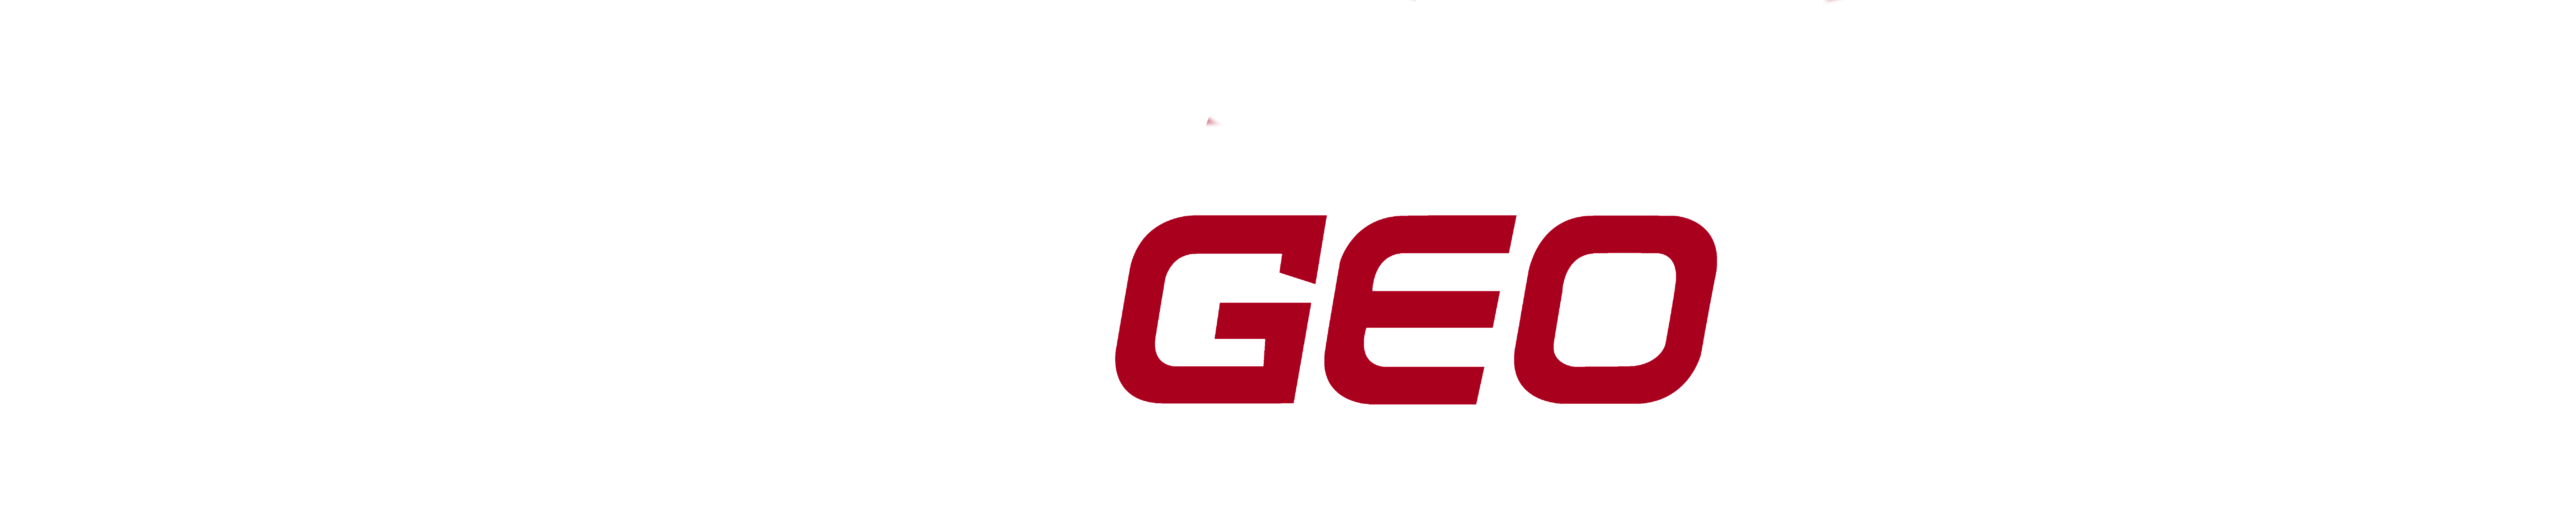 geolinks logo 